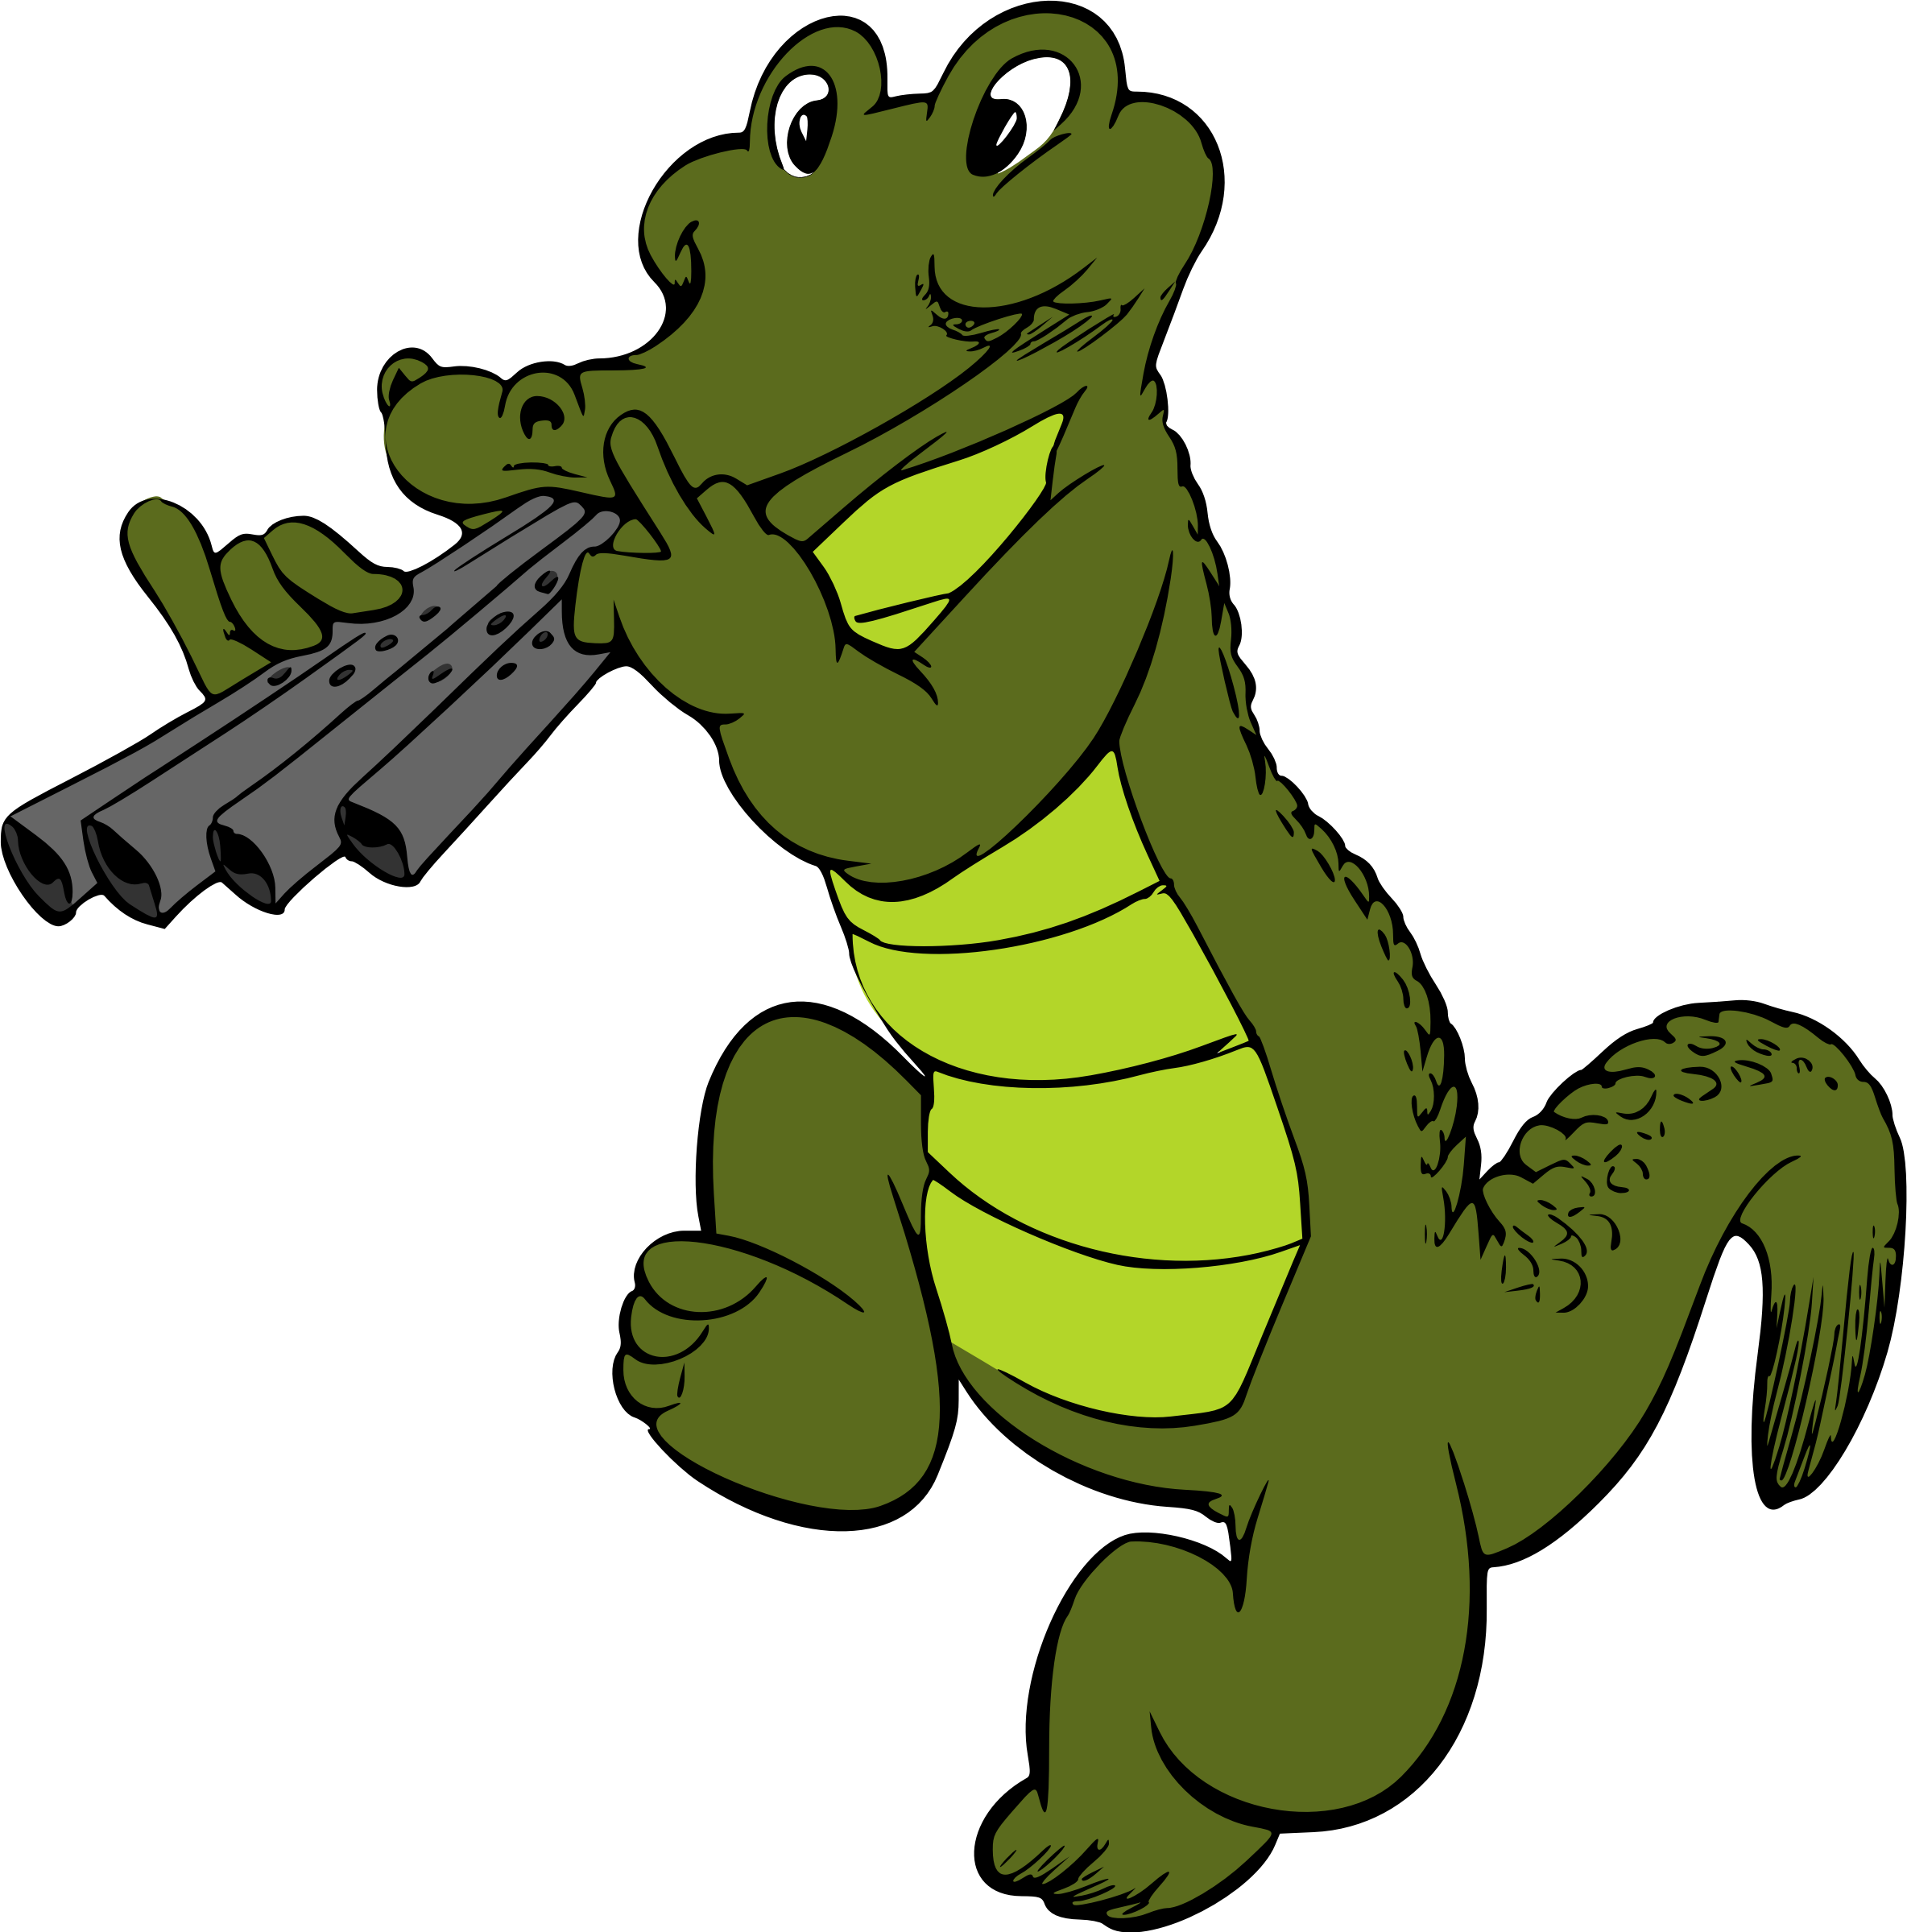 A Cartoon Of A Crocodile Playing A Flute